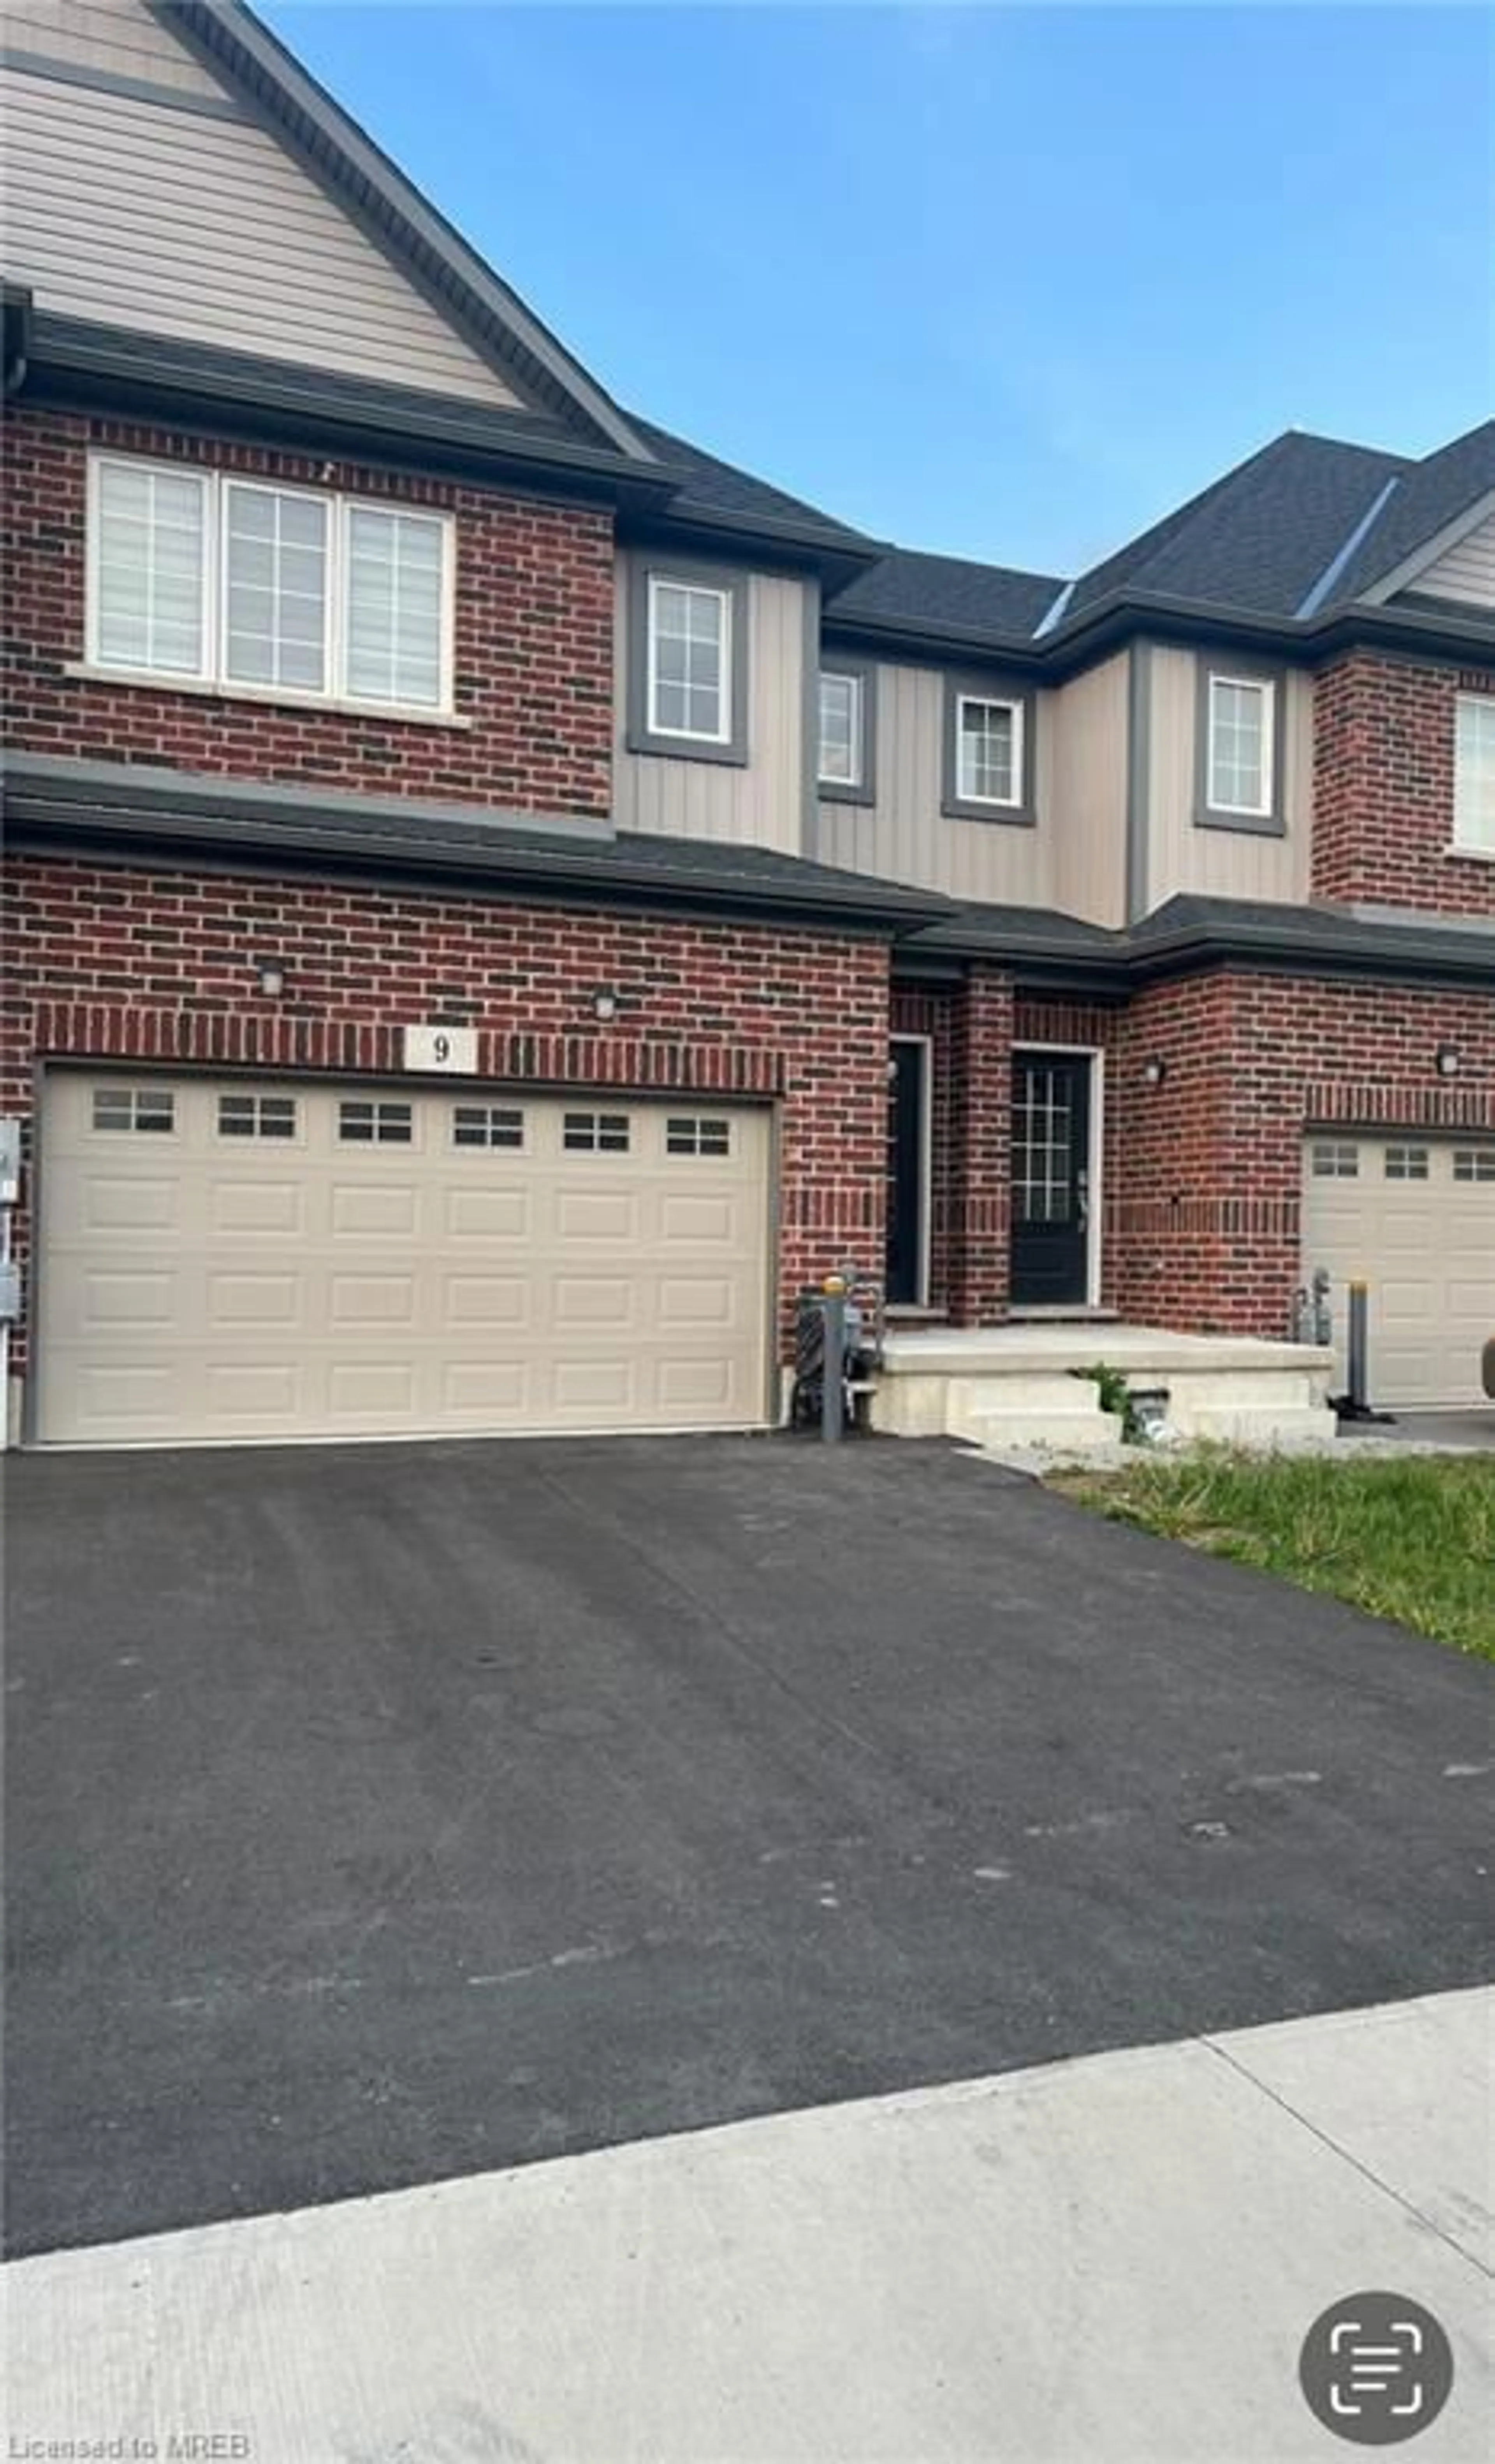 Home with brick exterior material for 9 Bur Oak Dr, Niagara Falls Ontario L2V 0L9